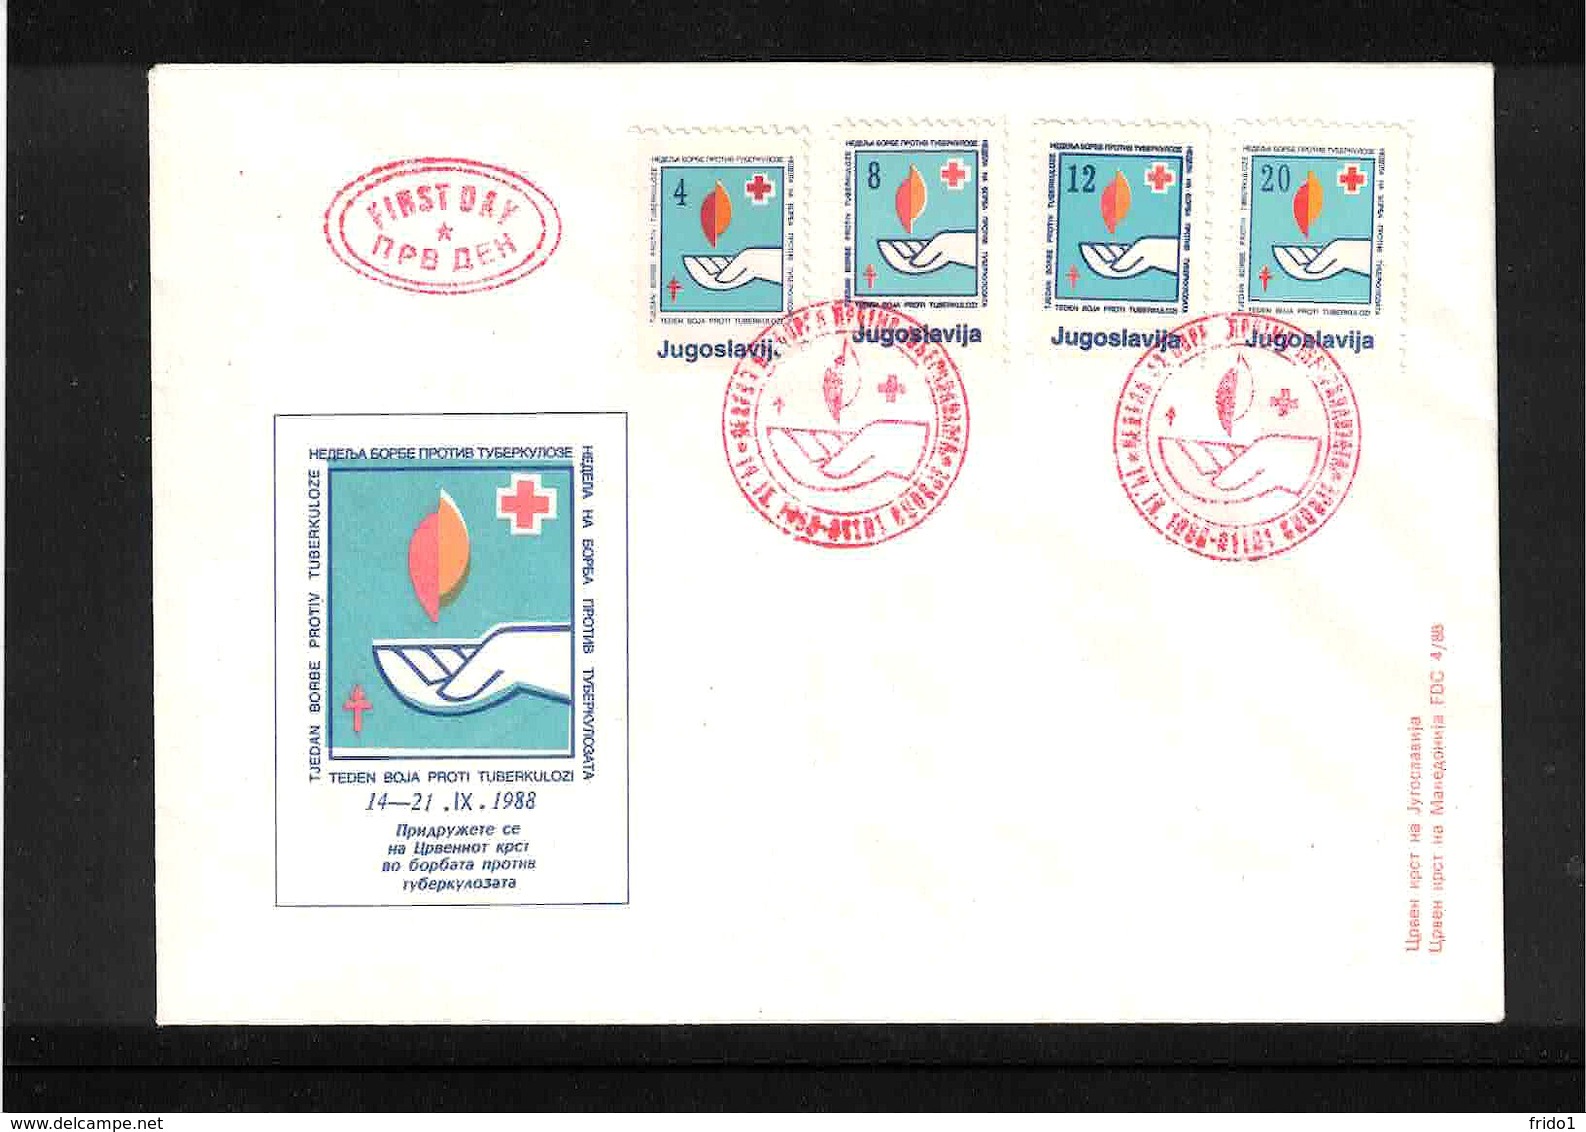 Jugoslawien / Yugoslavia 1988 TBC Tax Stamps FDC Scarce - Lettres & Documents